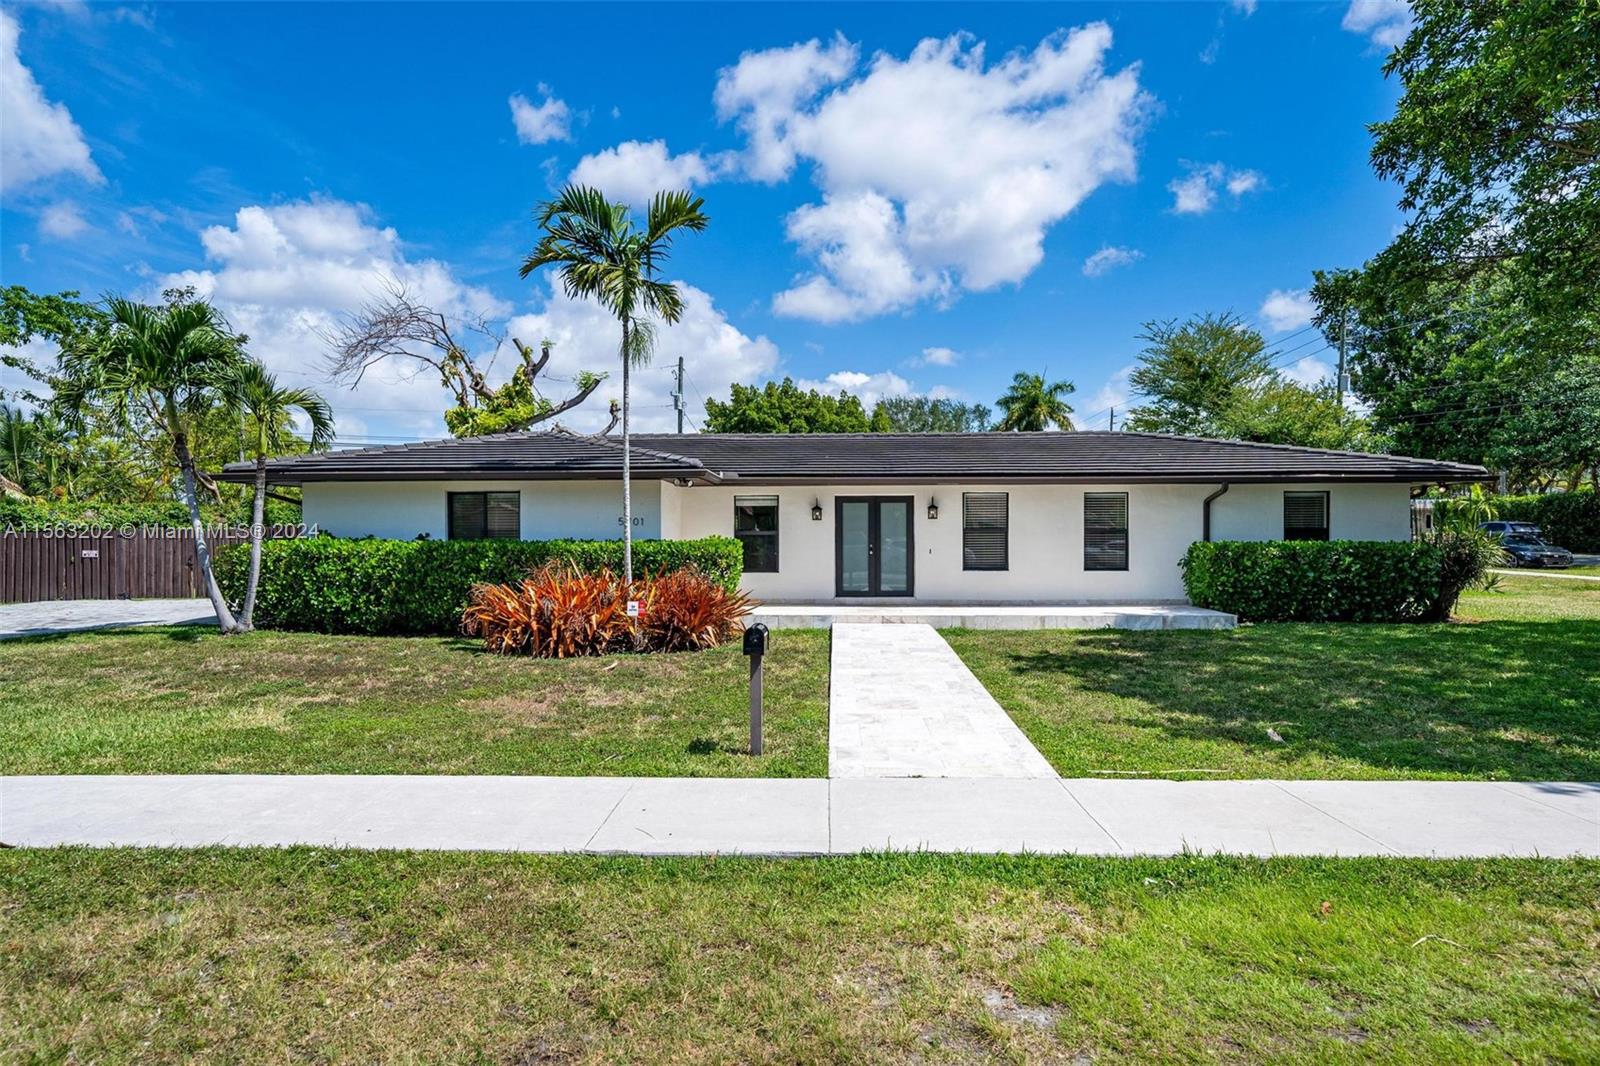 Rental Property at 5701 Sw 46th Ter Ter, Miami, Broward County, Florida - Bedrooms: 4 
Bathrooms: 3  - $7,500 MO.